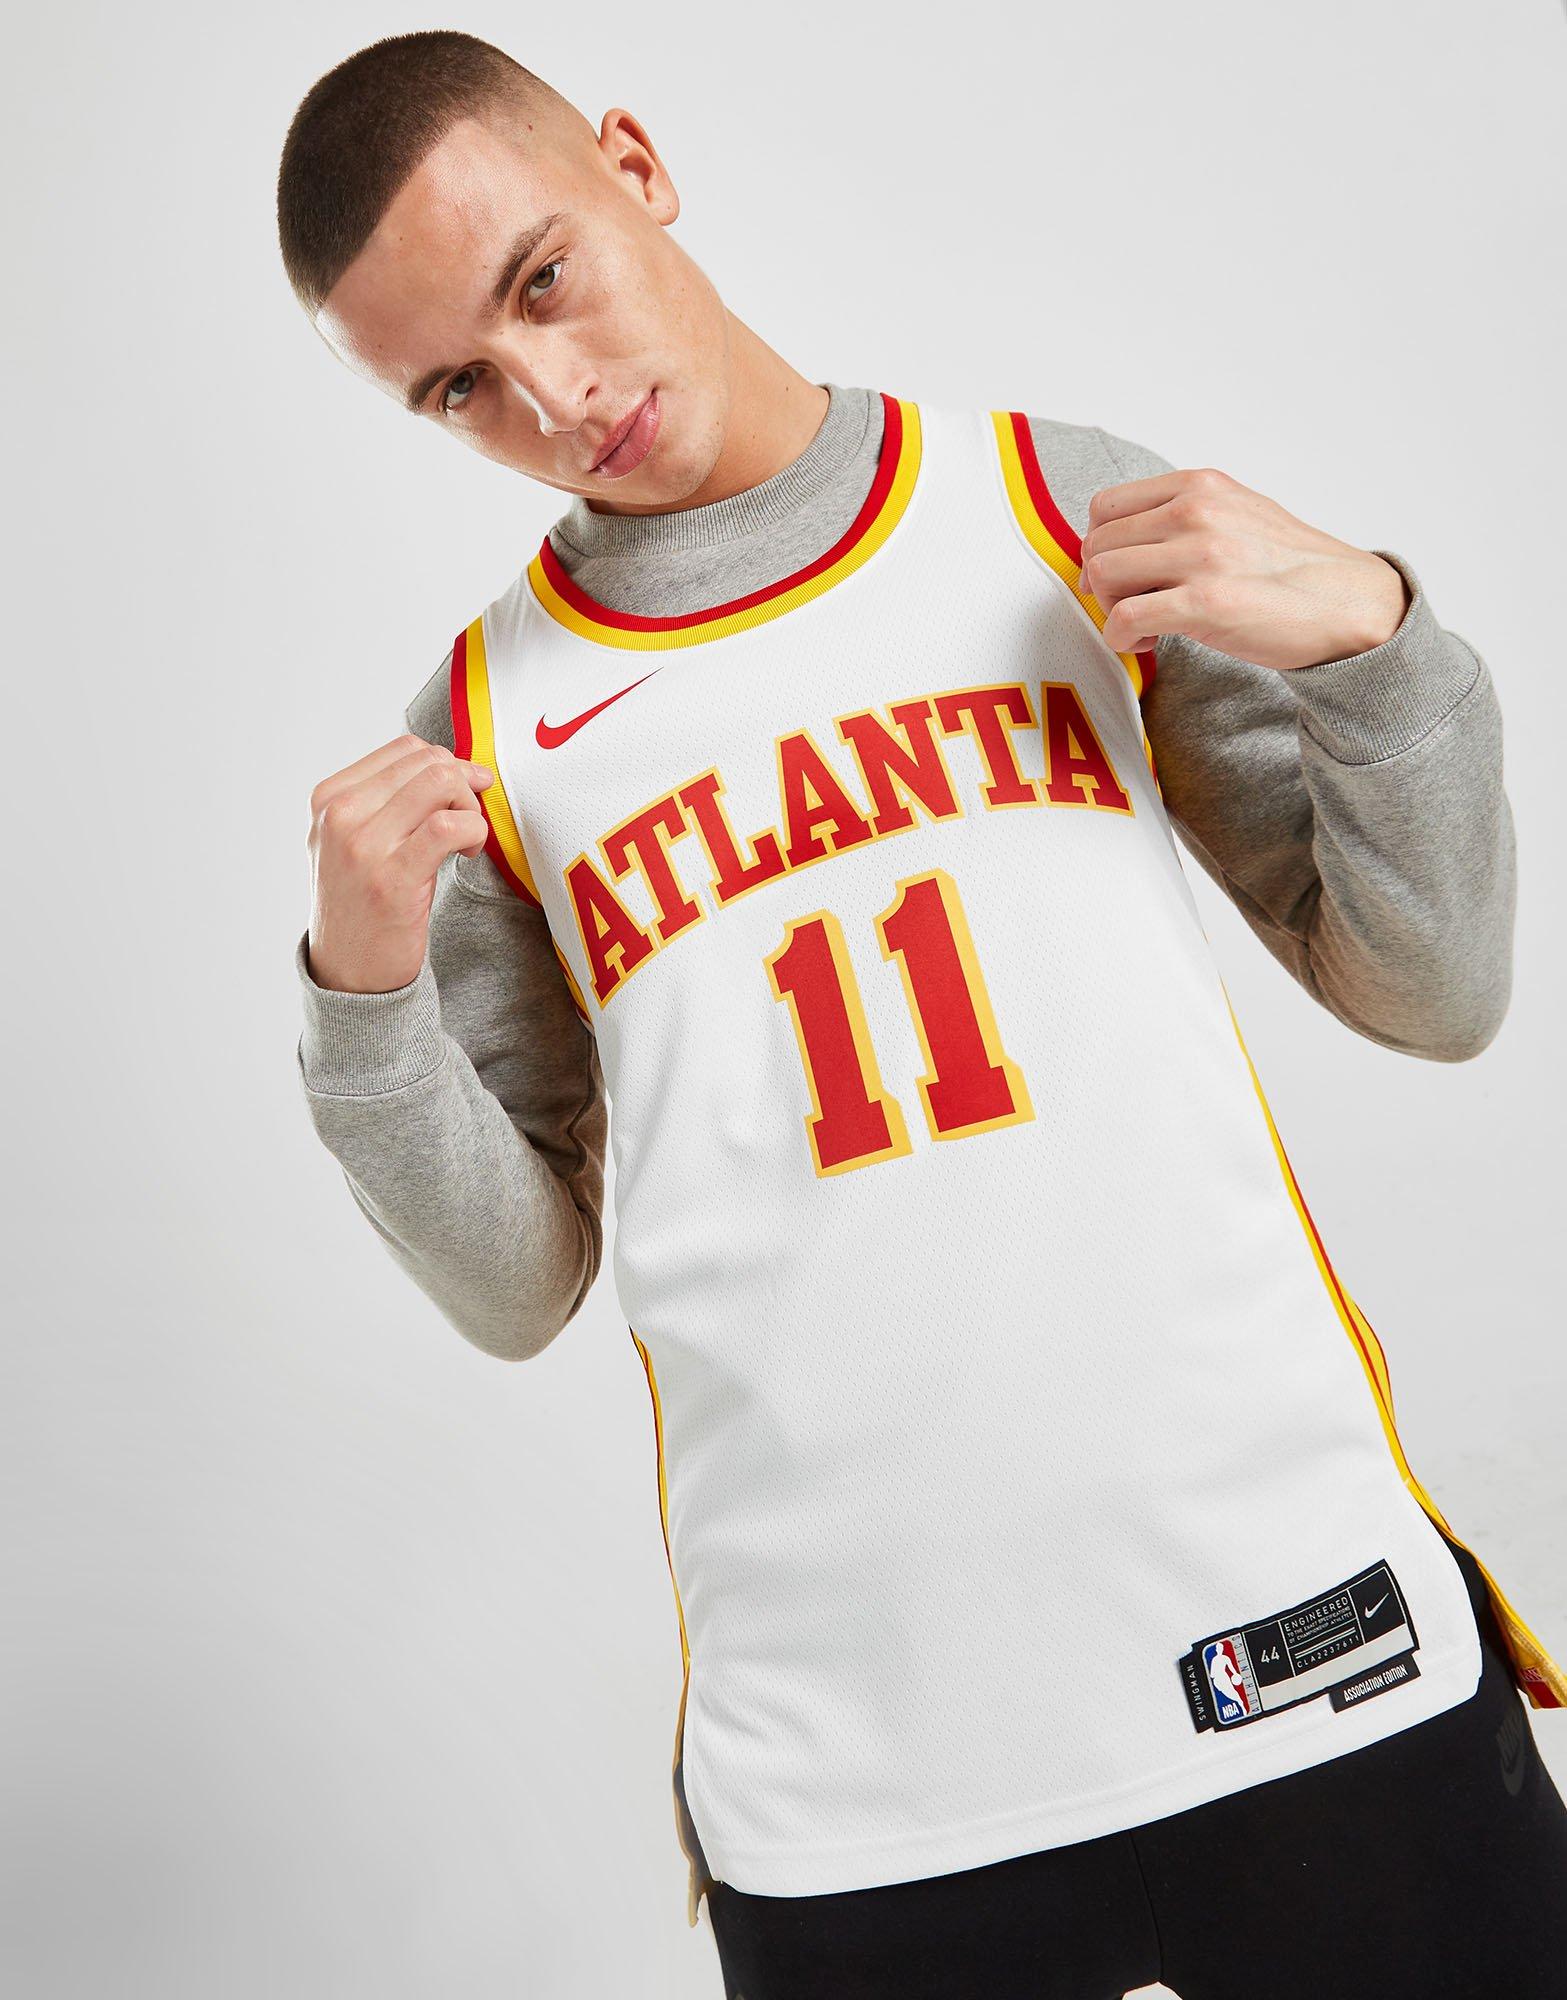 White Nike NBA Atlanta Hawks Young #11 Swingman Jersey